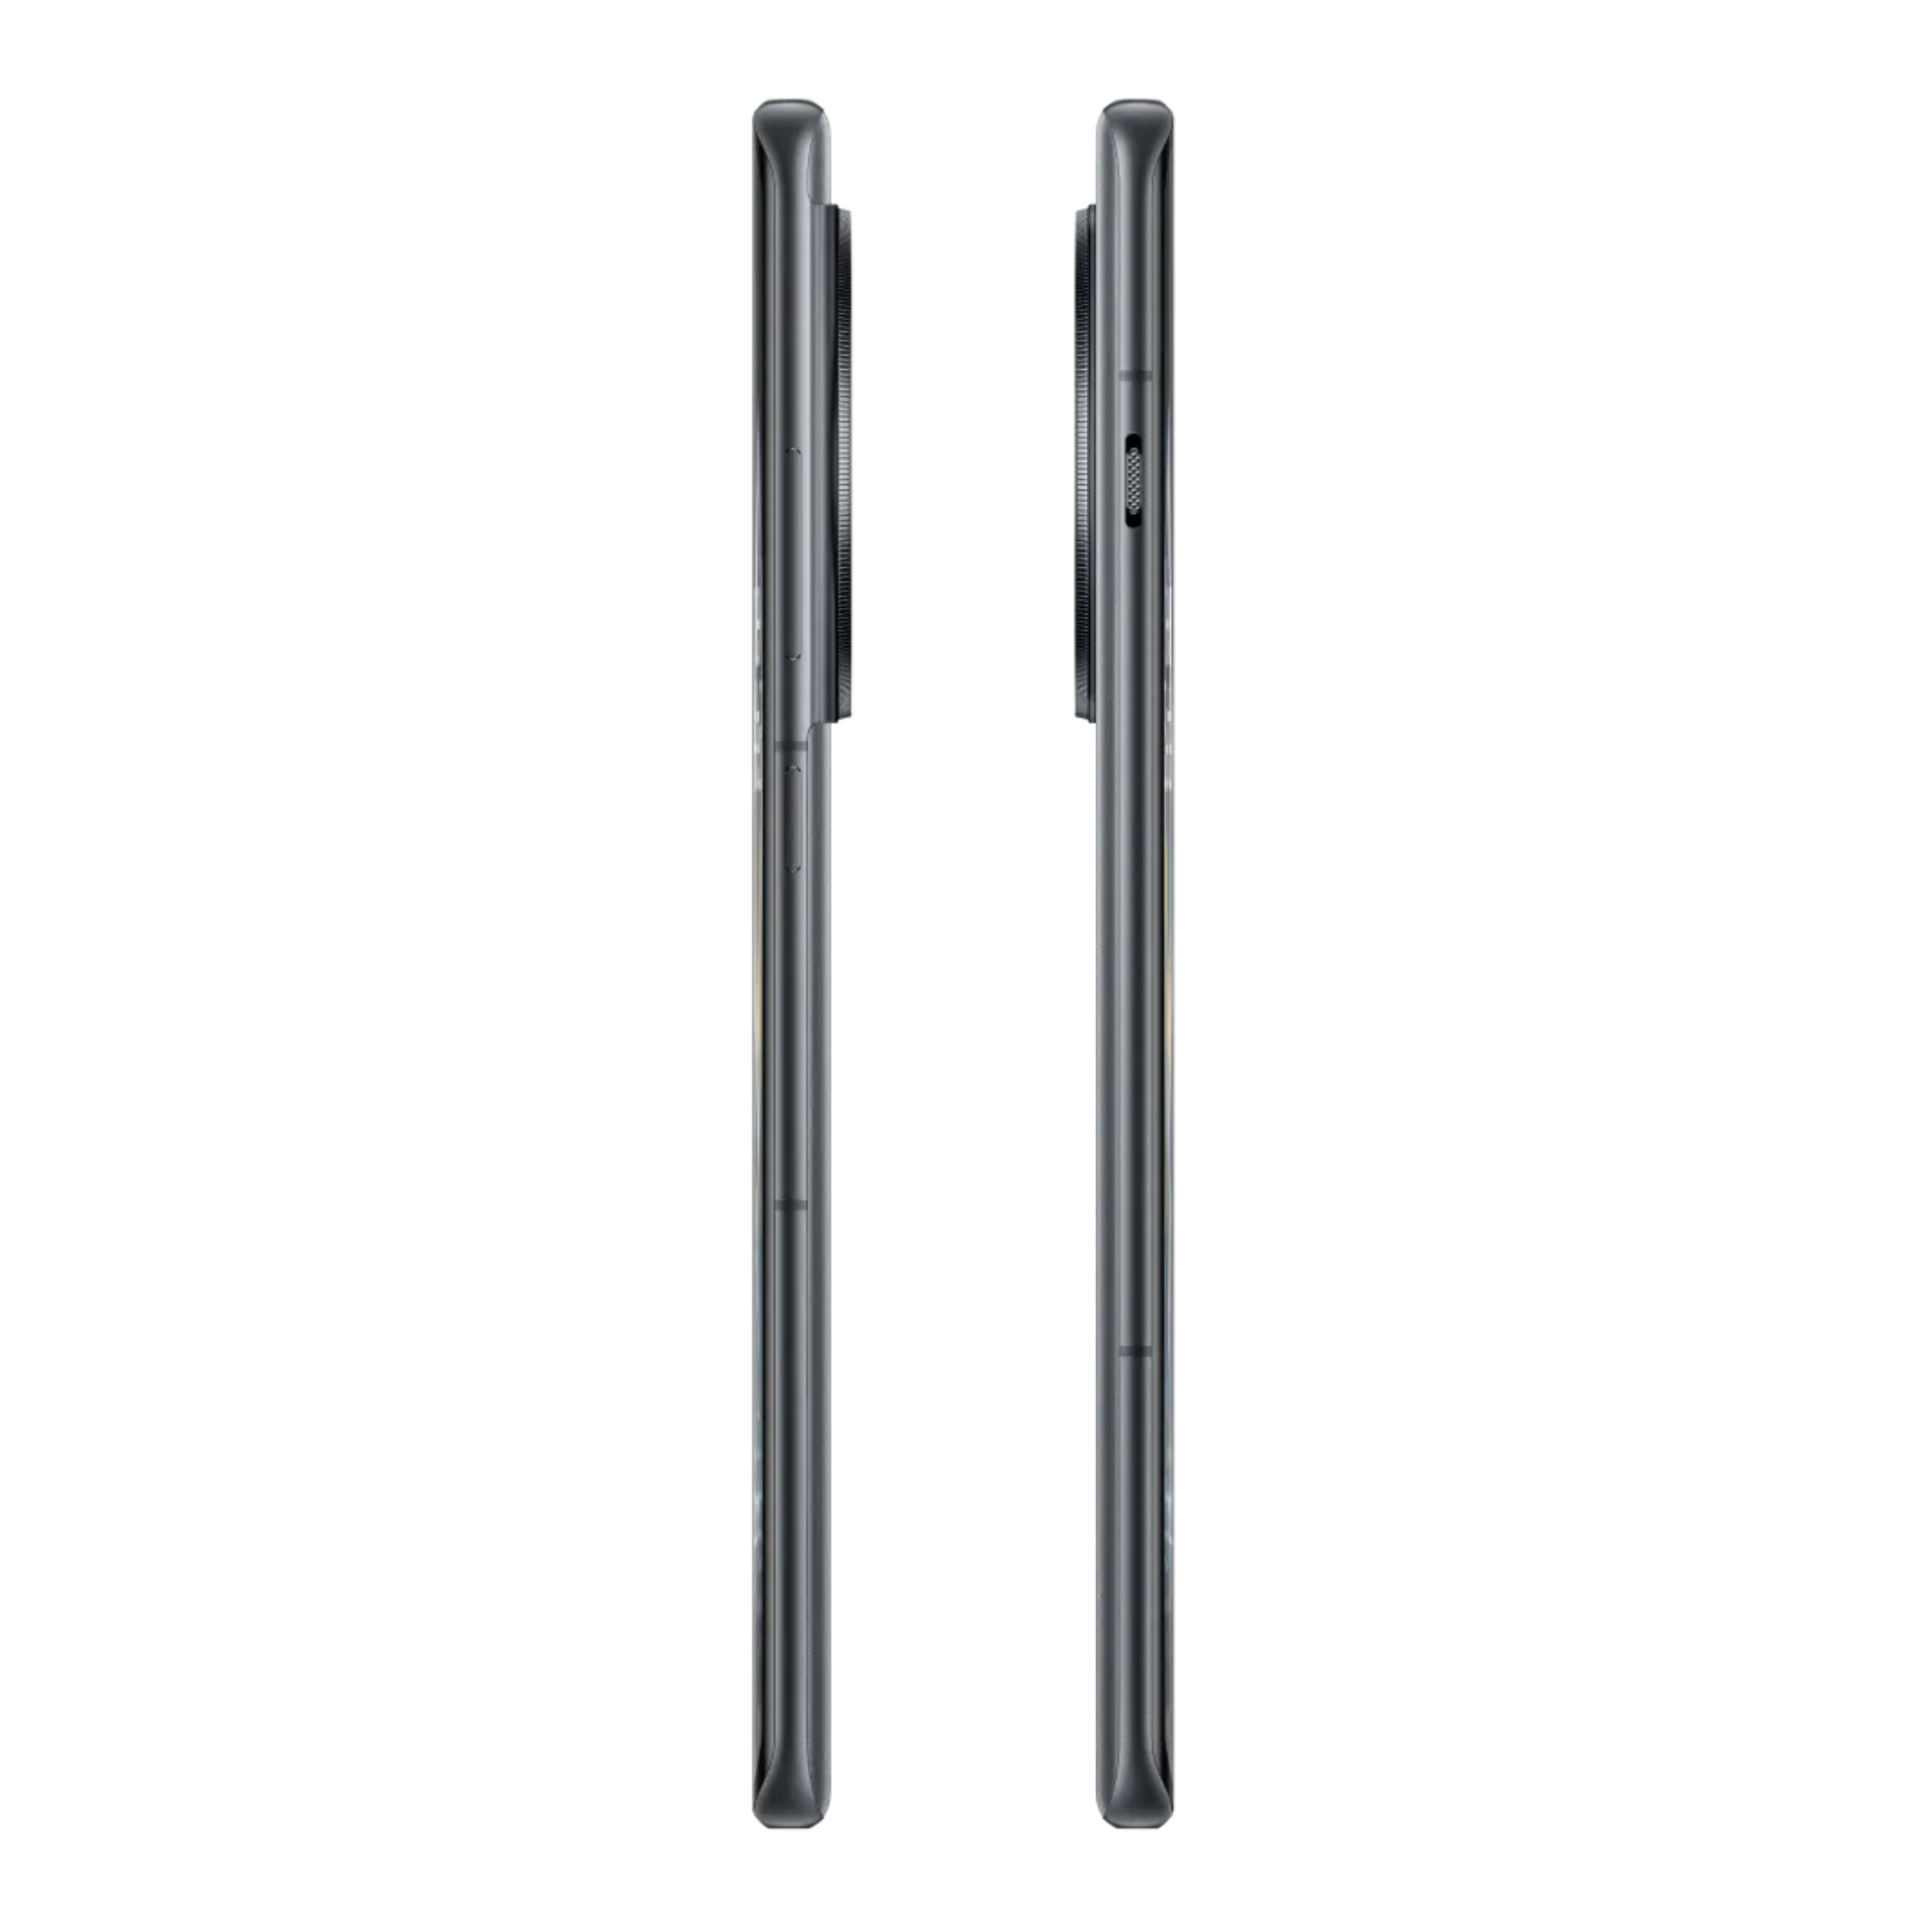 OnePlus 12R 128GB (Unlocked) Iron Gray CPH2611 - Best Buy